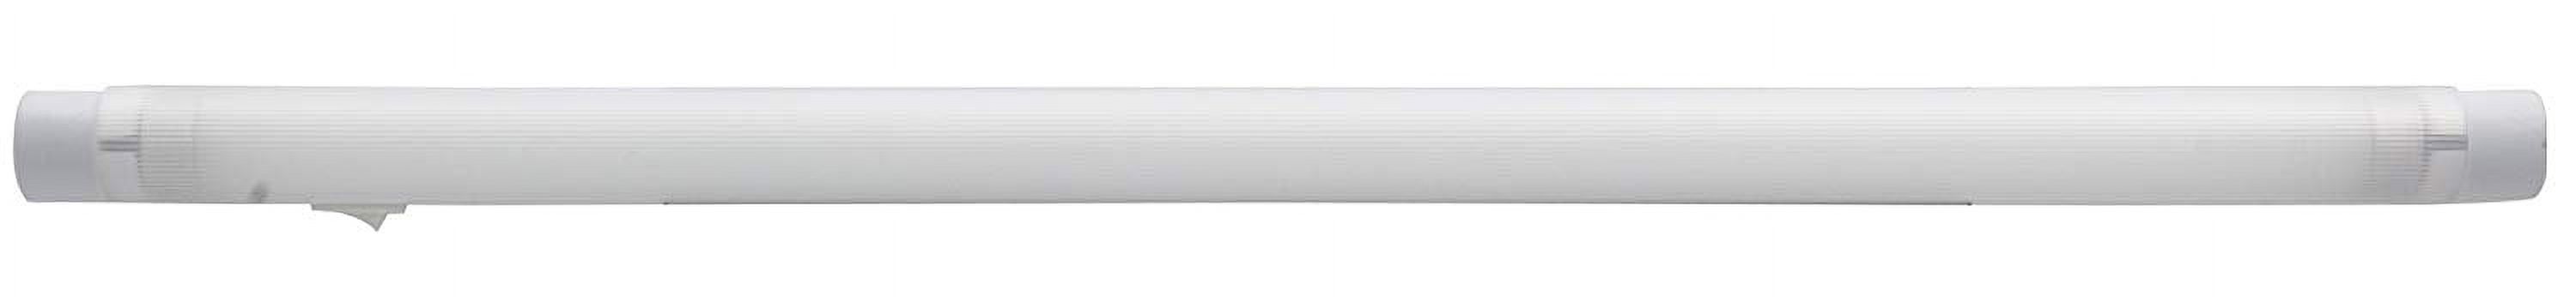 GE SlimLine 23in. Plug-In Fluorescent Under Cabinet Light Fixture, 10169 - image 5 of 7